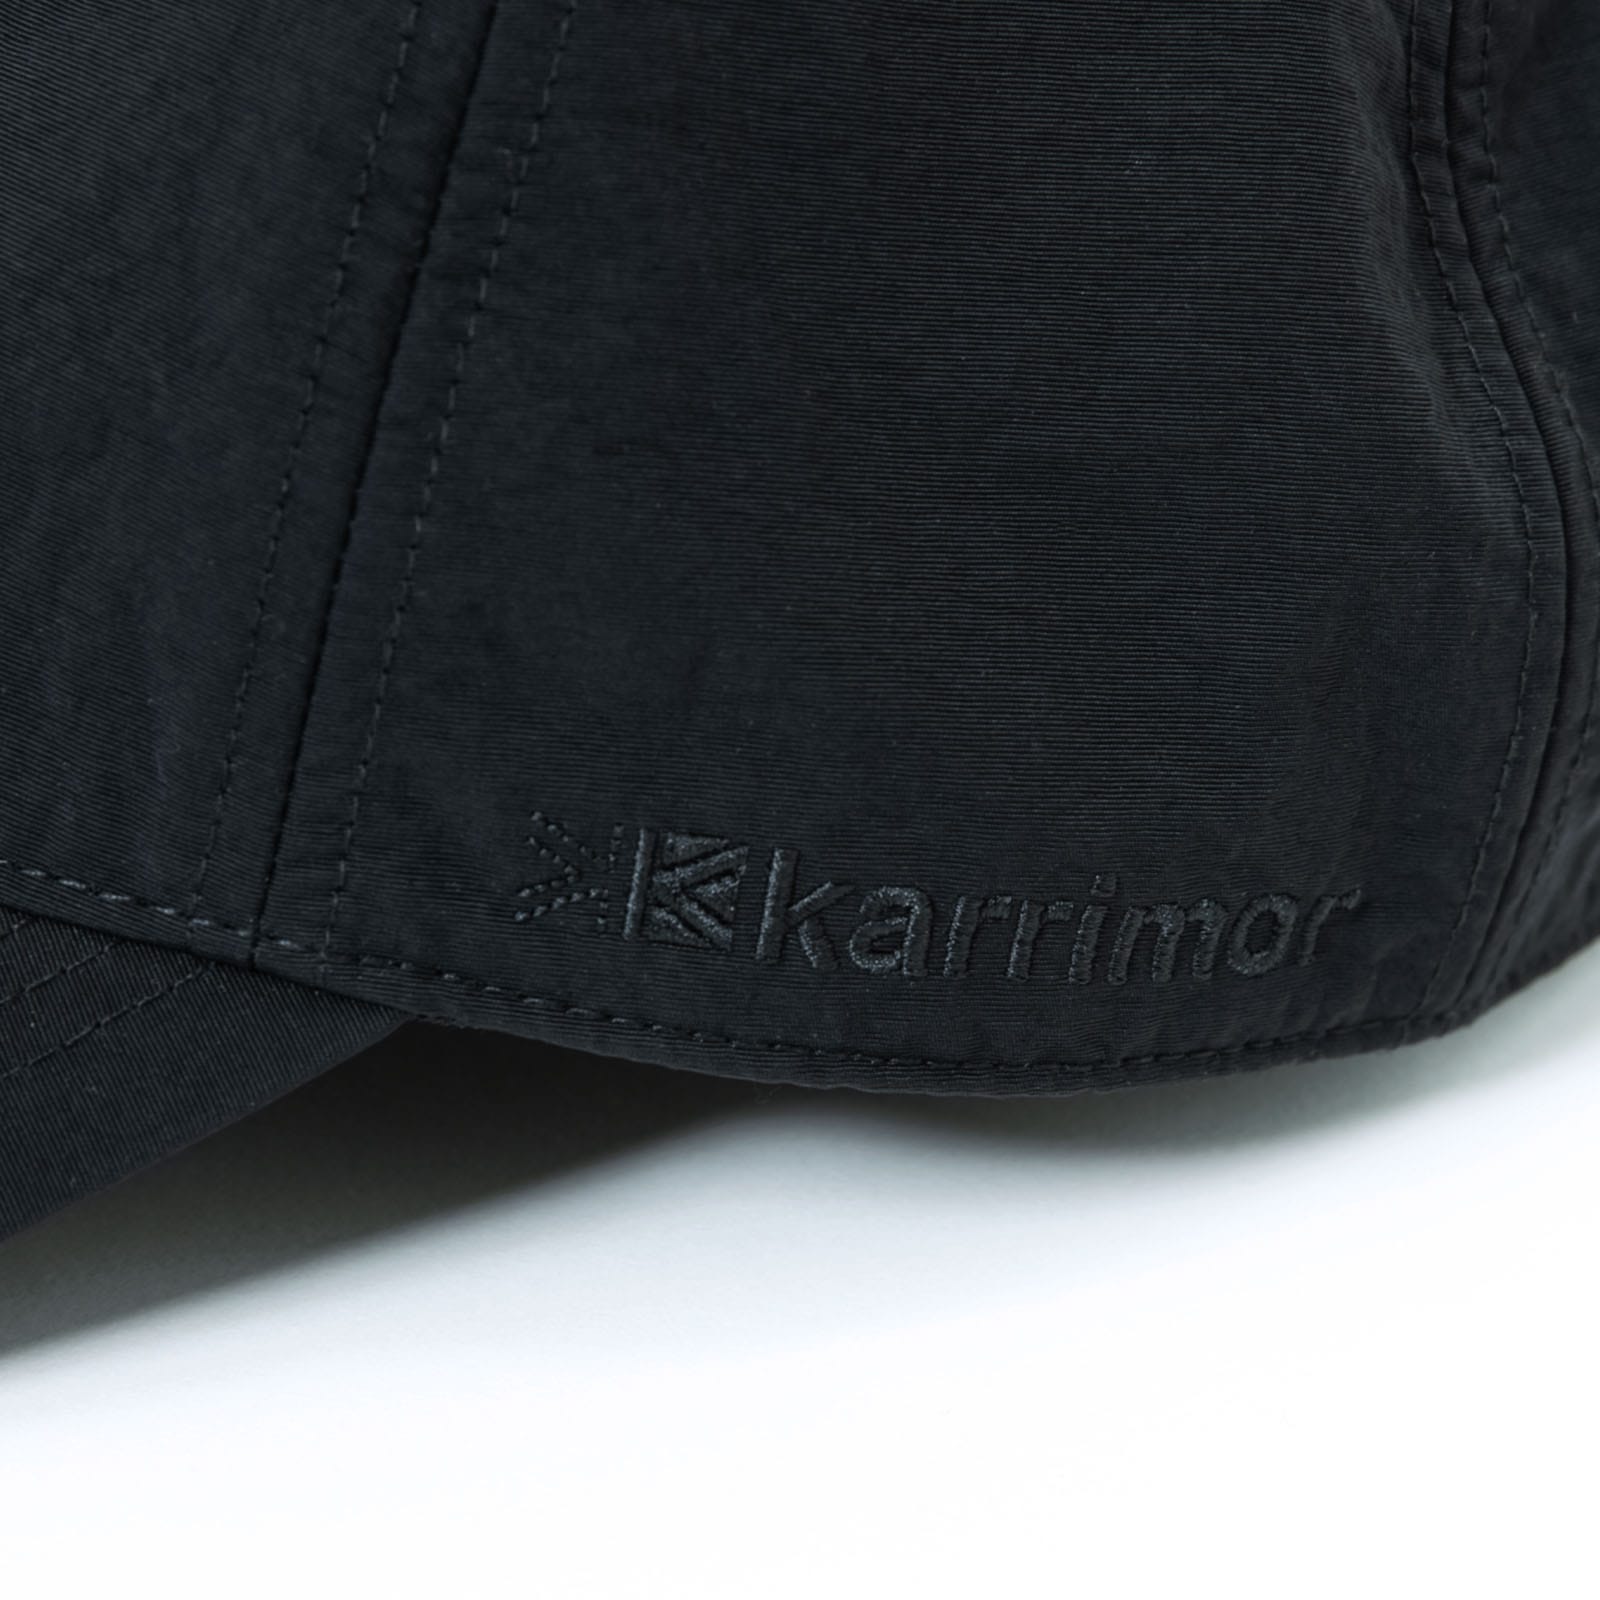 outdoor cap | karrimor カリマー | リュックサック・アウトドアウェア | karrimor official site